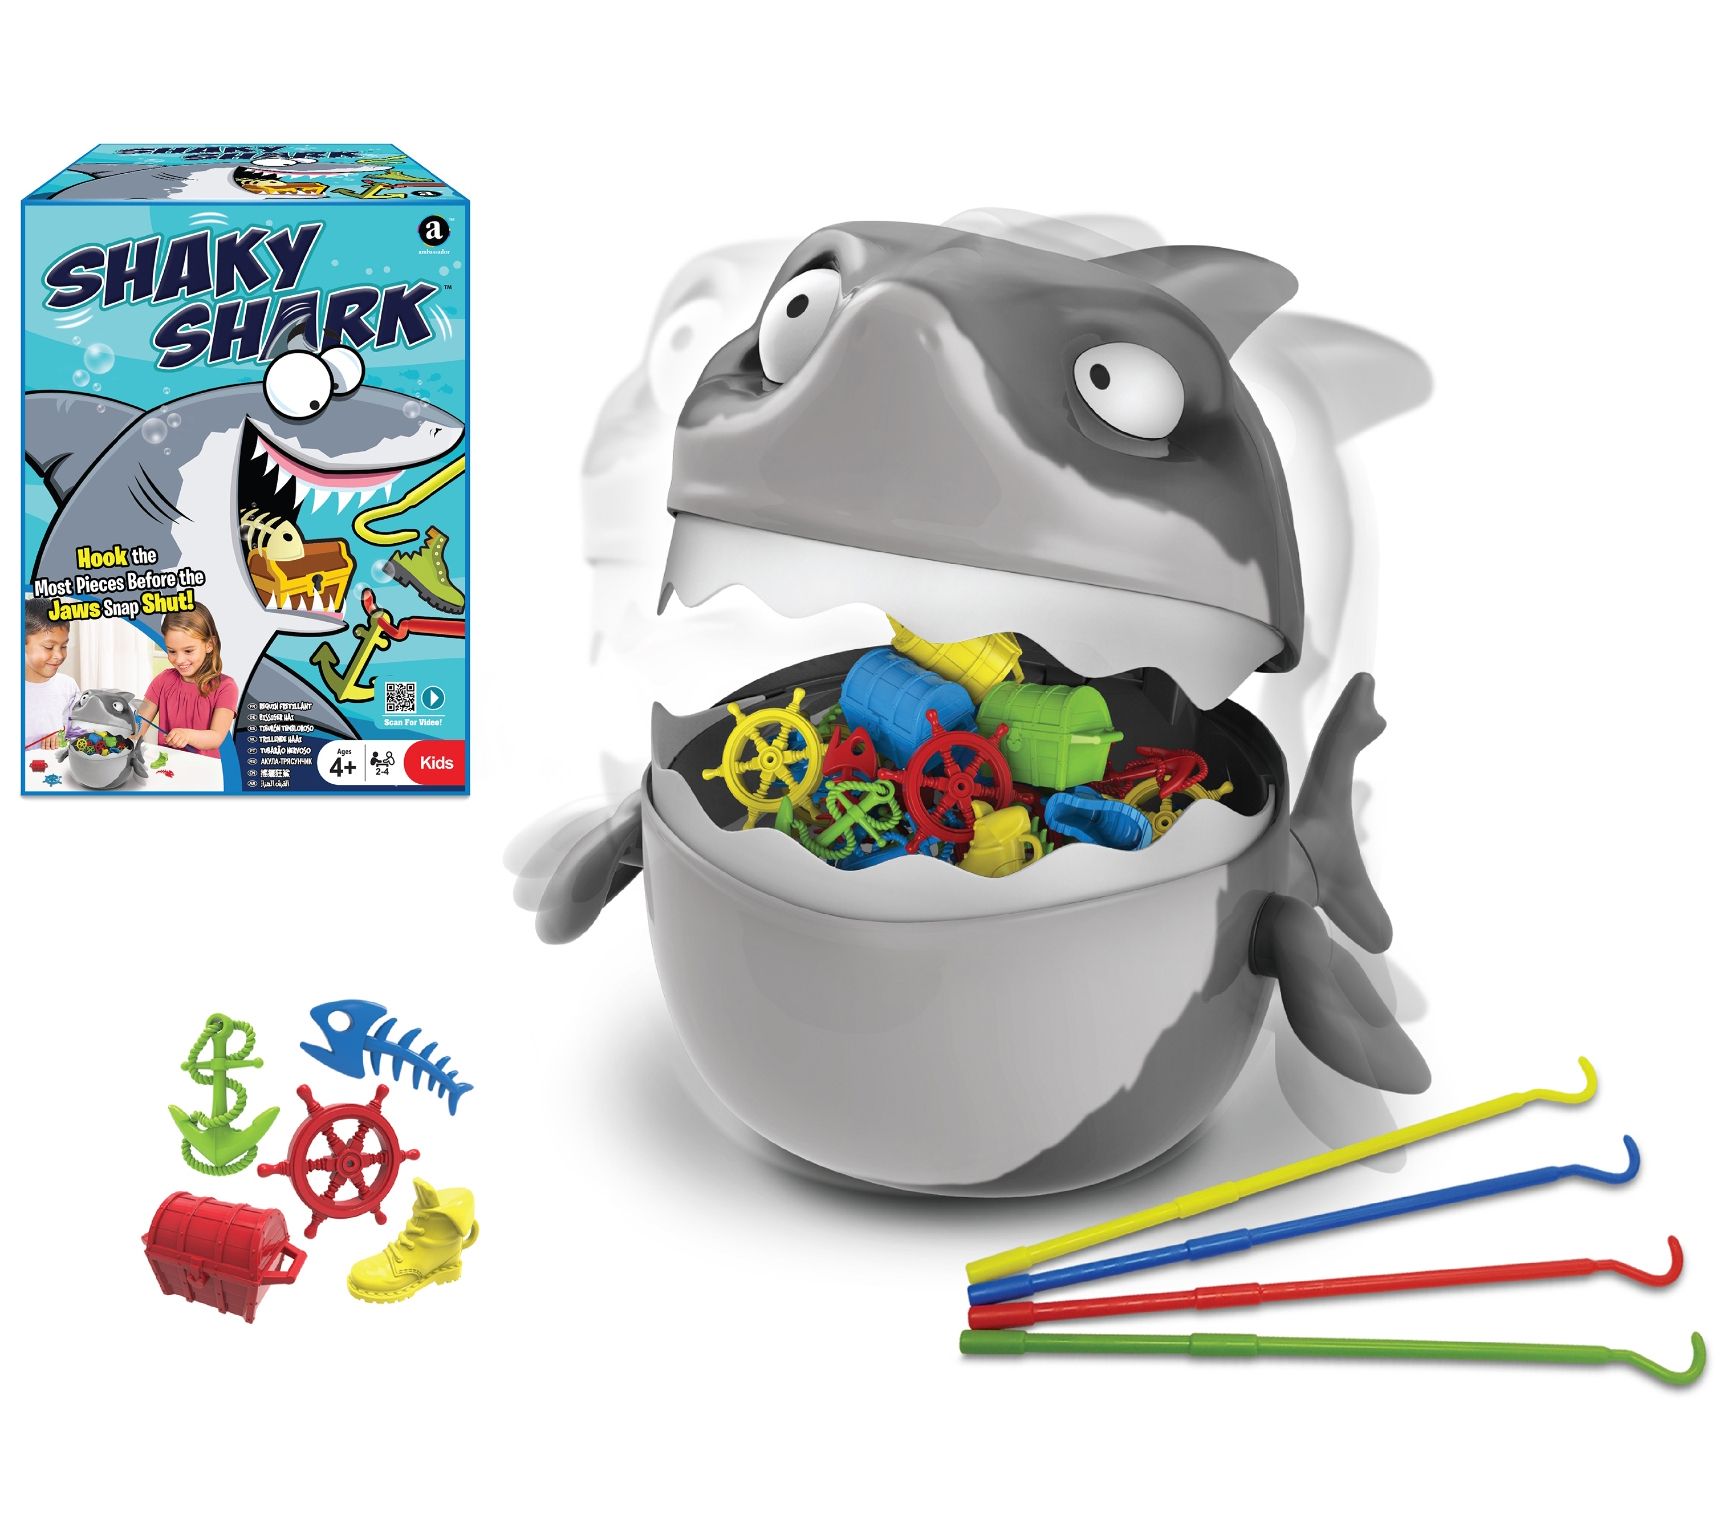 Pressman Toys - Shark Bite- Kids & Family Game 